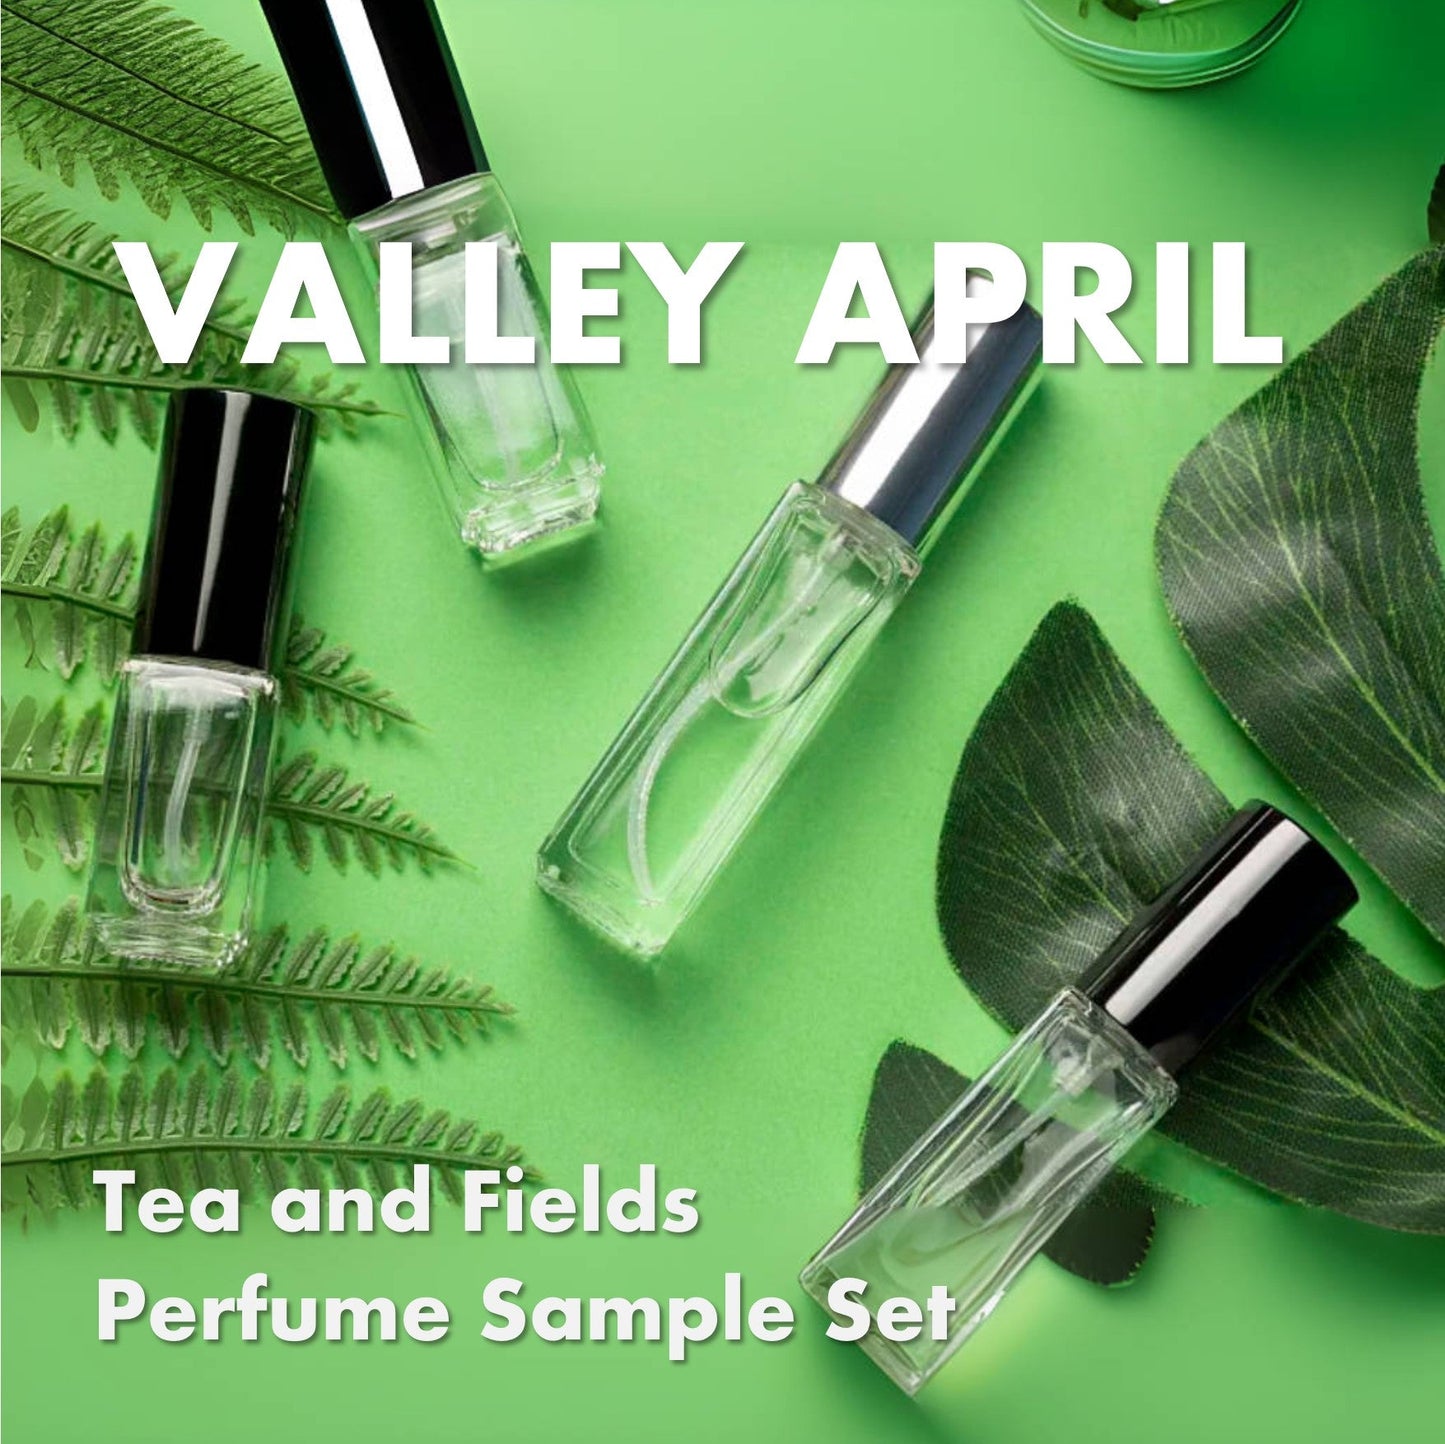 Tea and Fields Perfume Sample Set